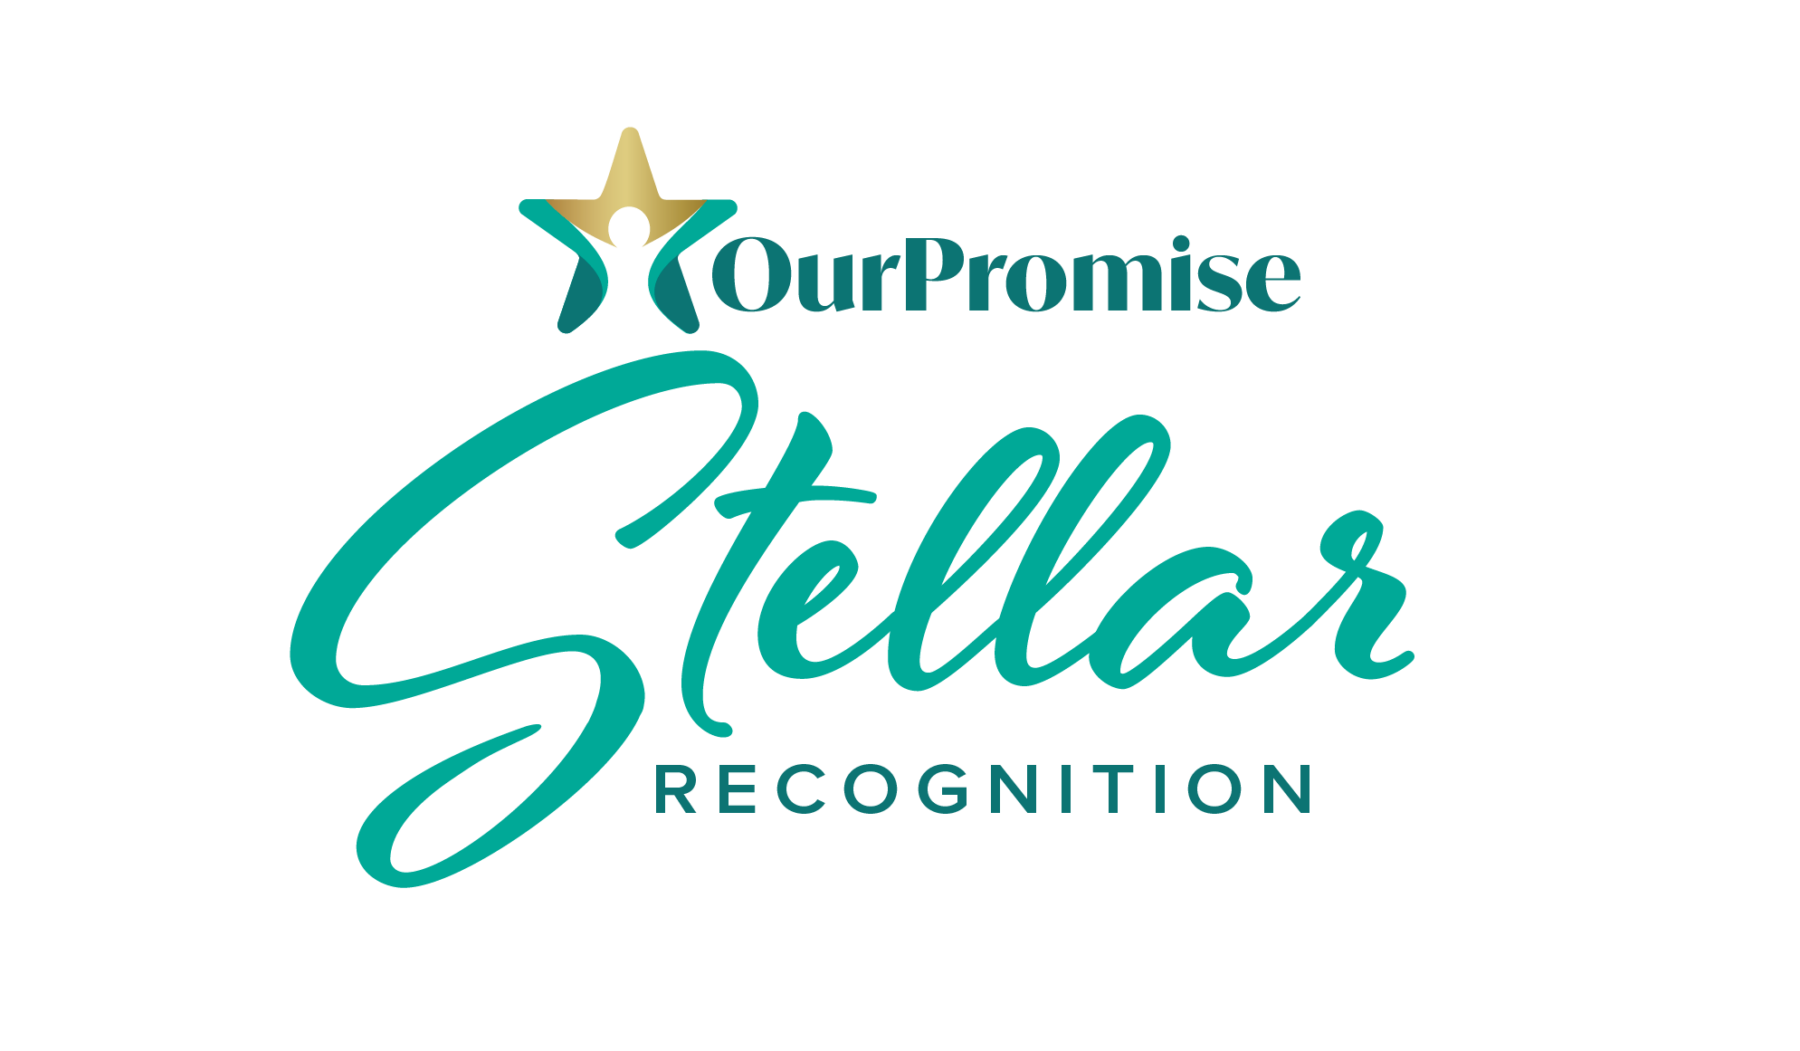 Our Promise Stellar Award